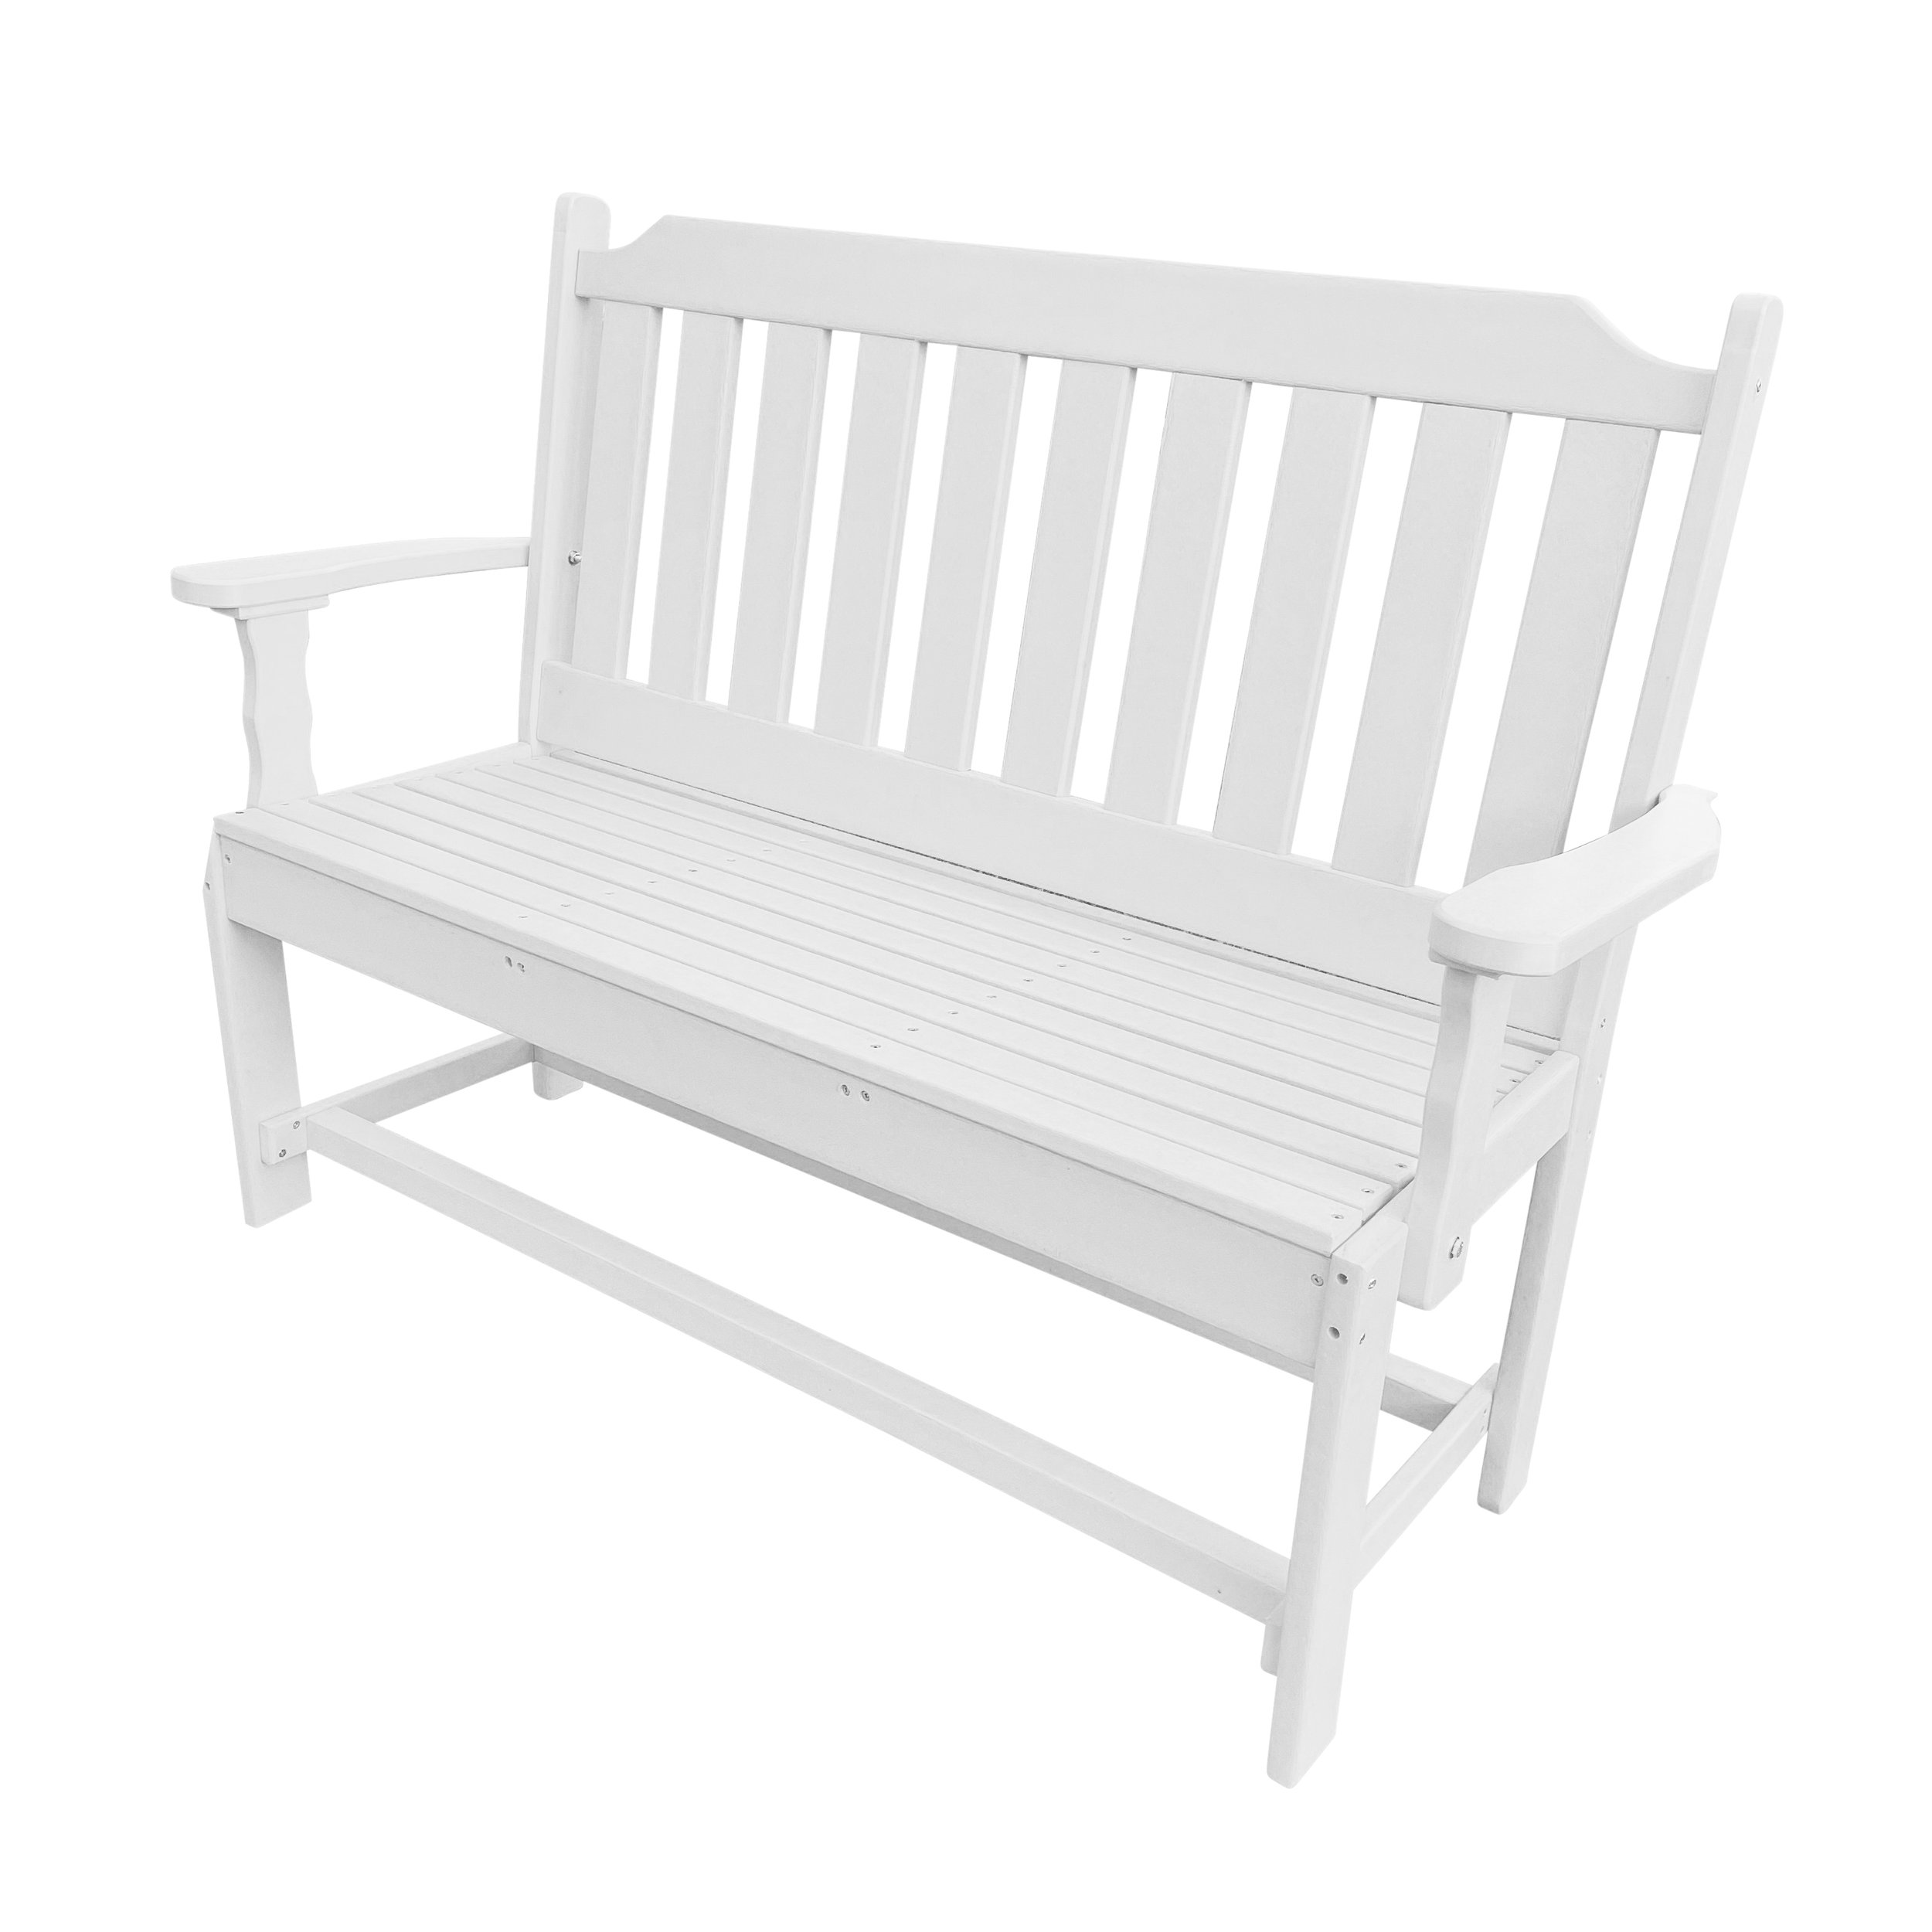 Garden bench | White.jpg